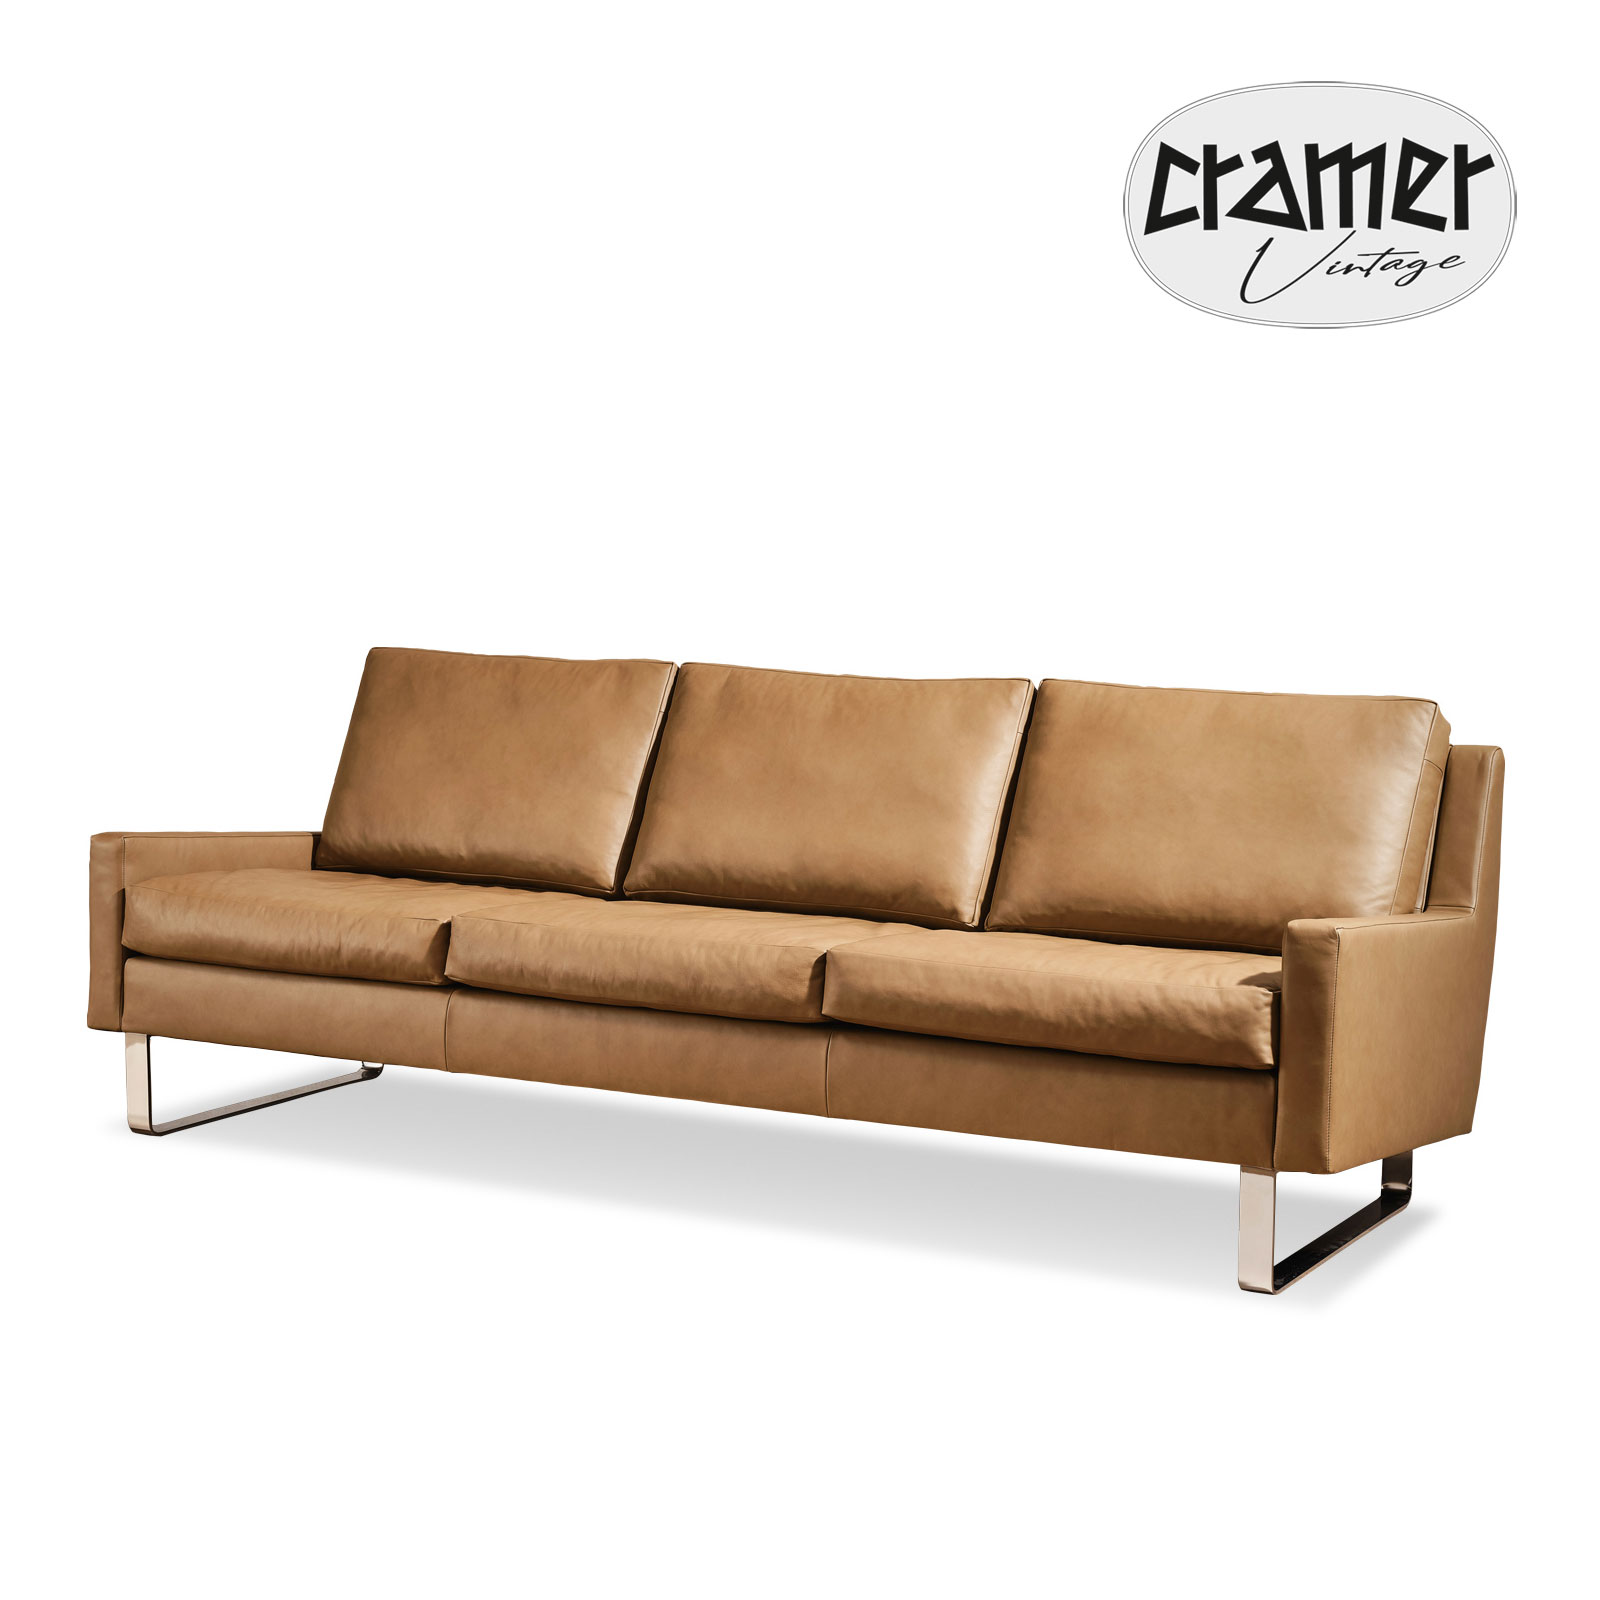 Cramer Vintage - Sofa 105 von Cramer Polstermanufaktur